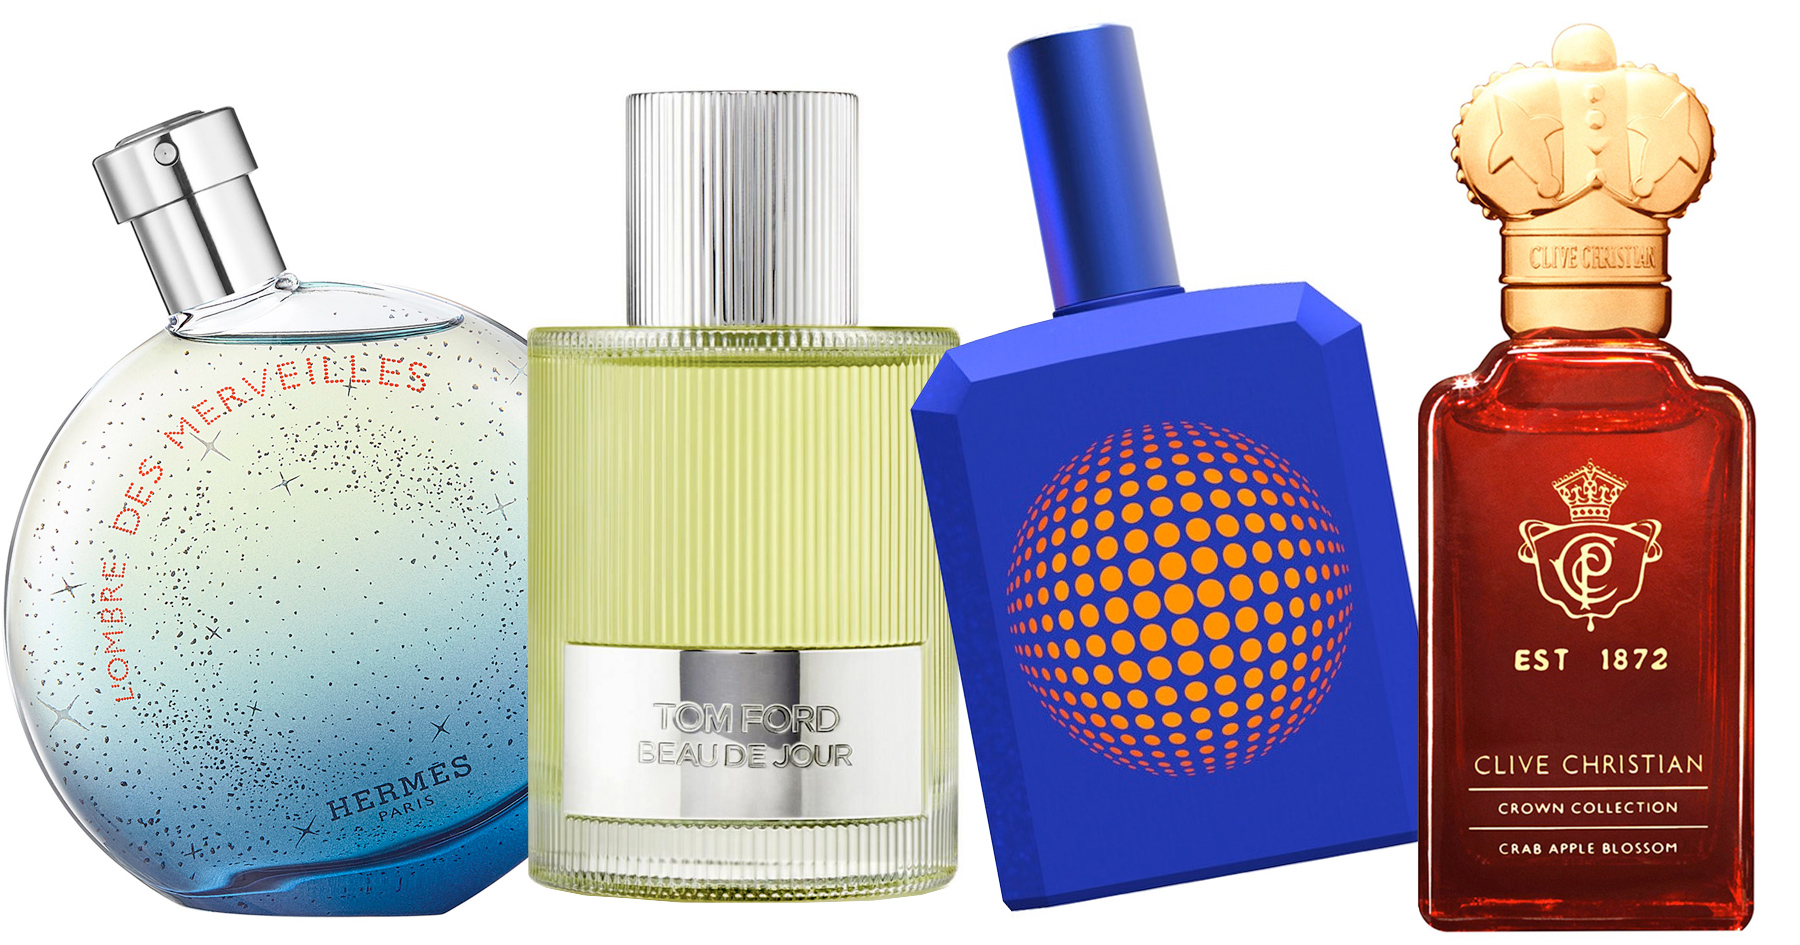 FRAGRANTICA Editors' Favorite Perfumes of 2020 Fragrantica